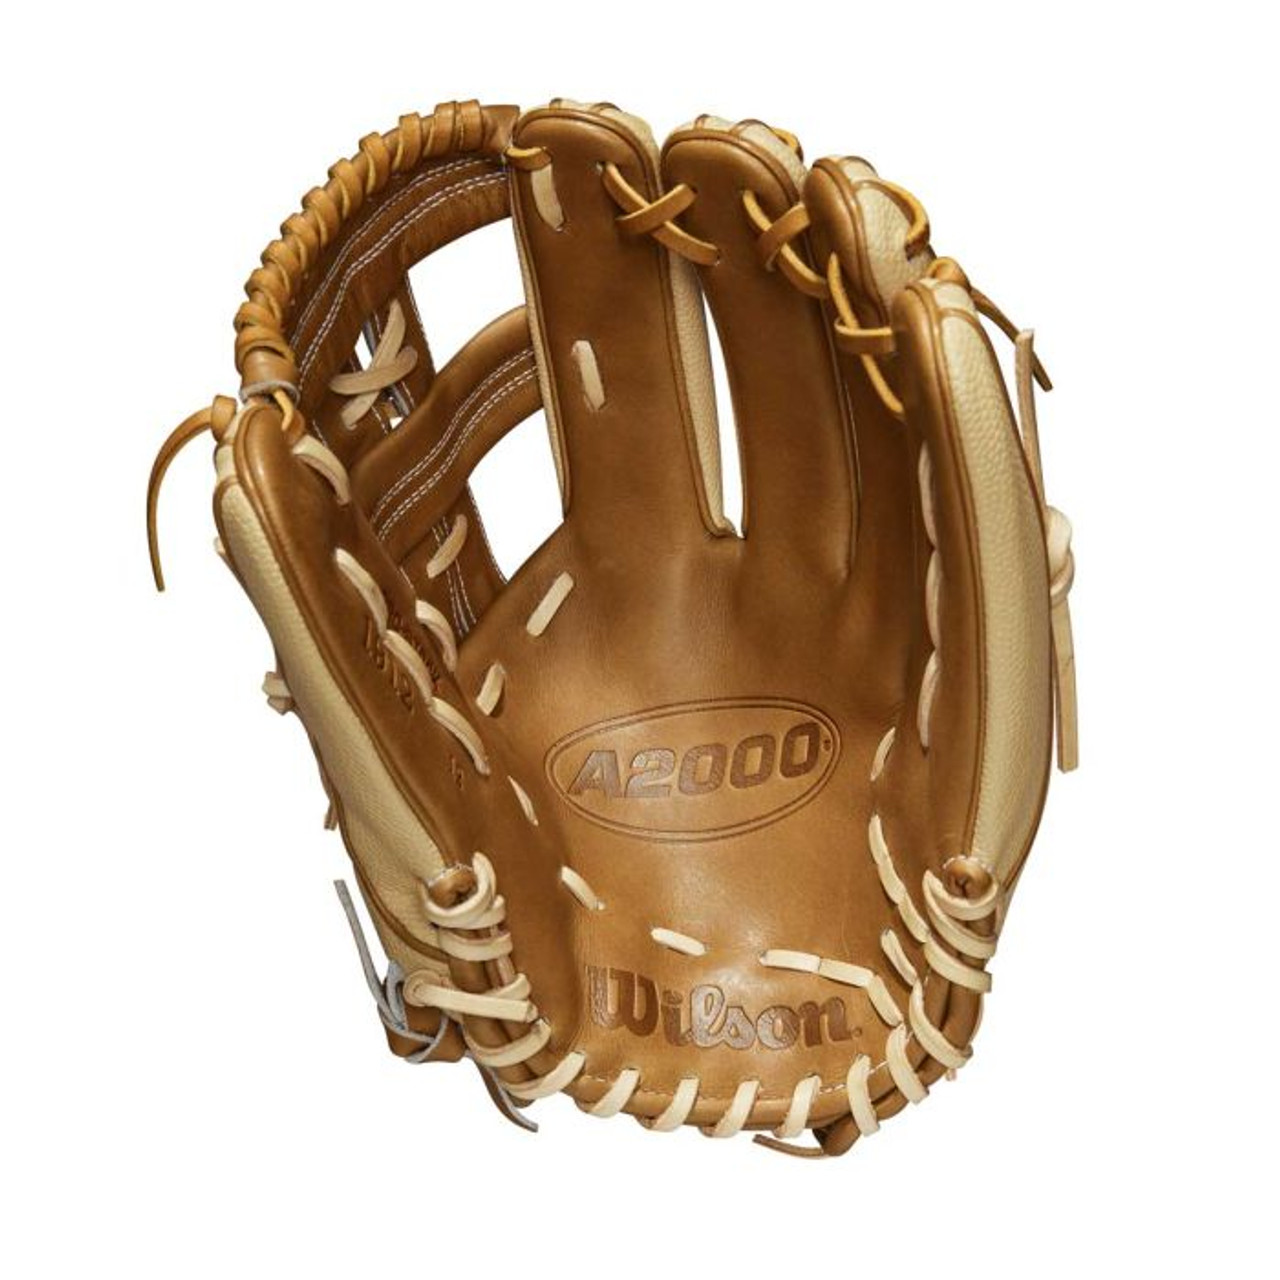 Wilson A2000 Julio Rodriguez JR44 GM Outfield Baseball Glove - 12.75